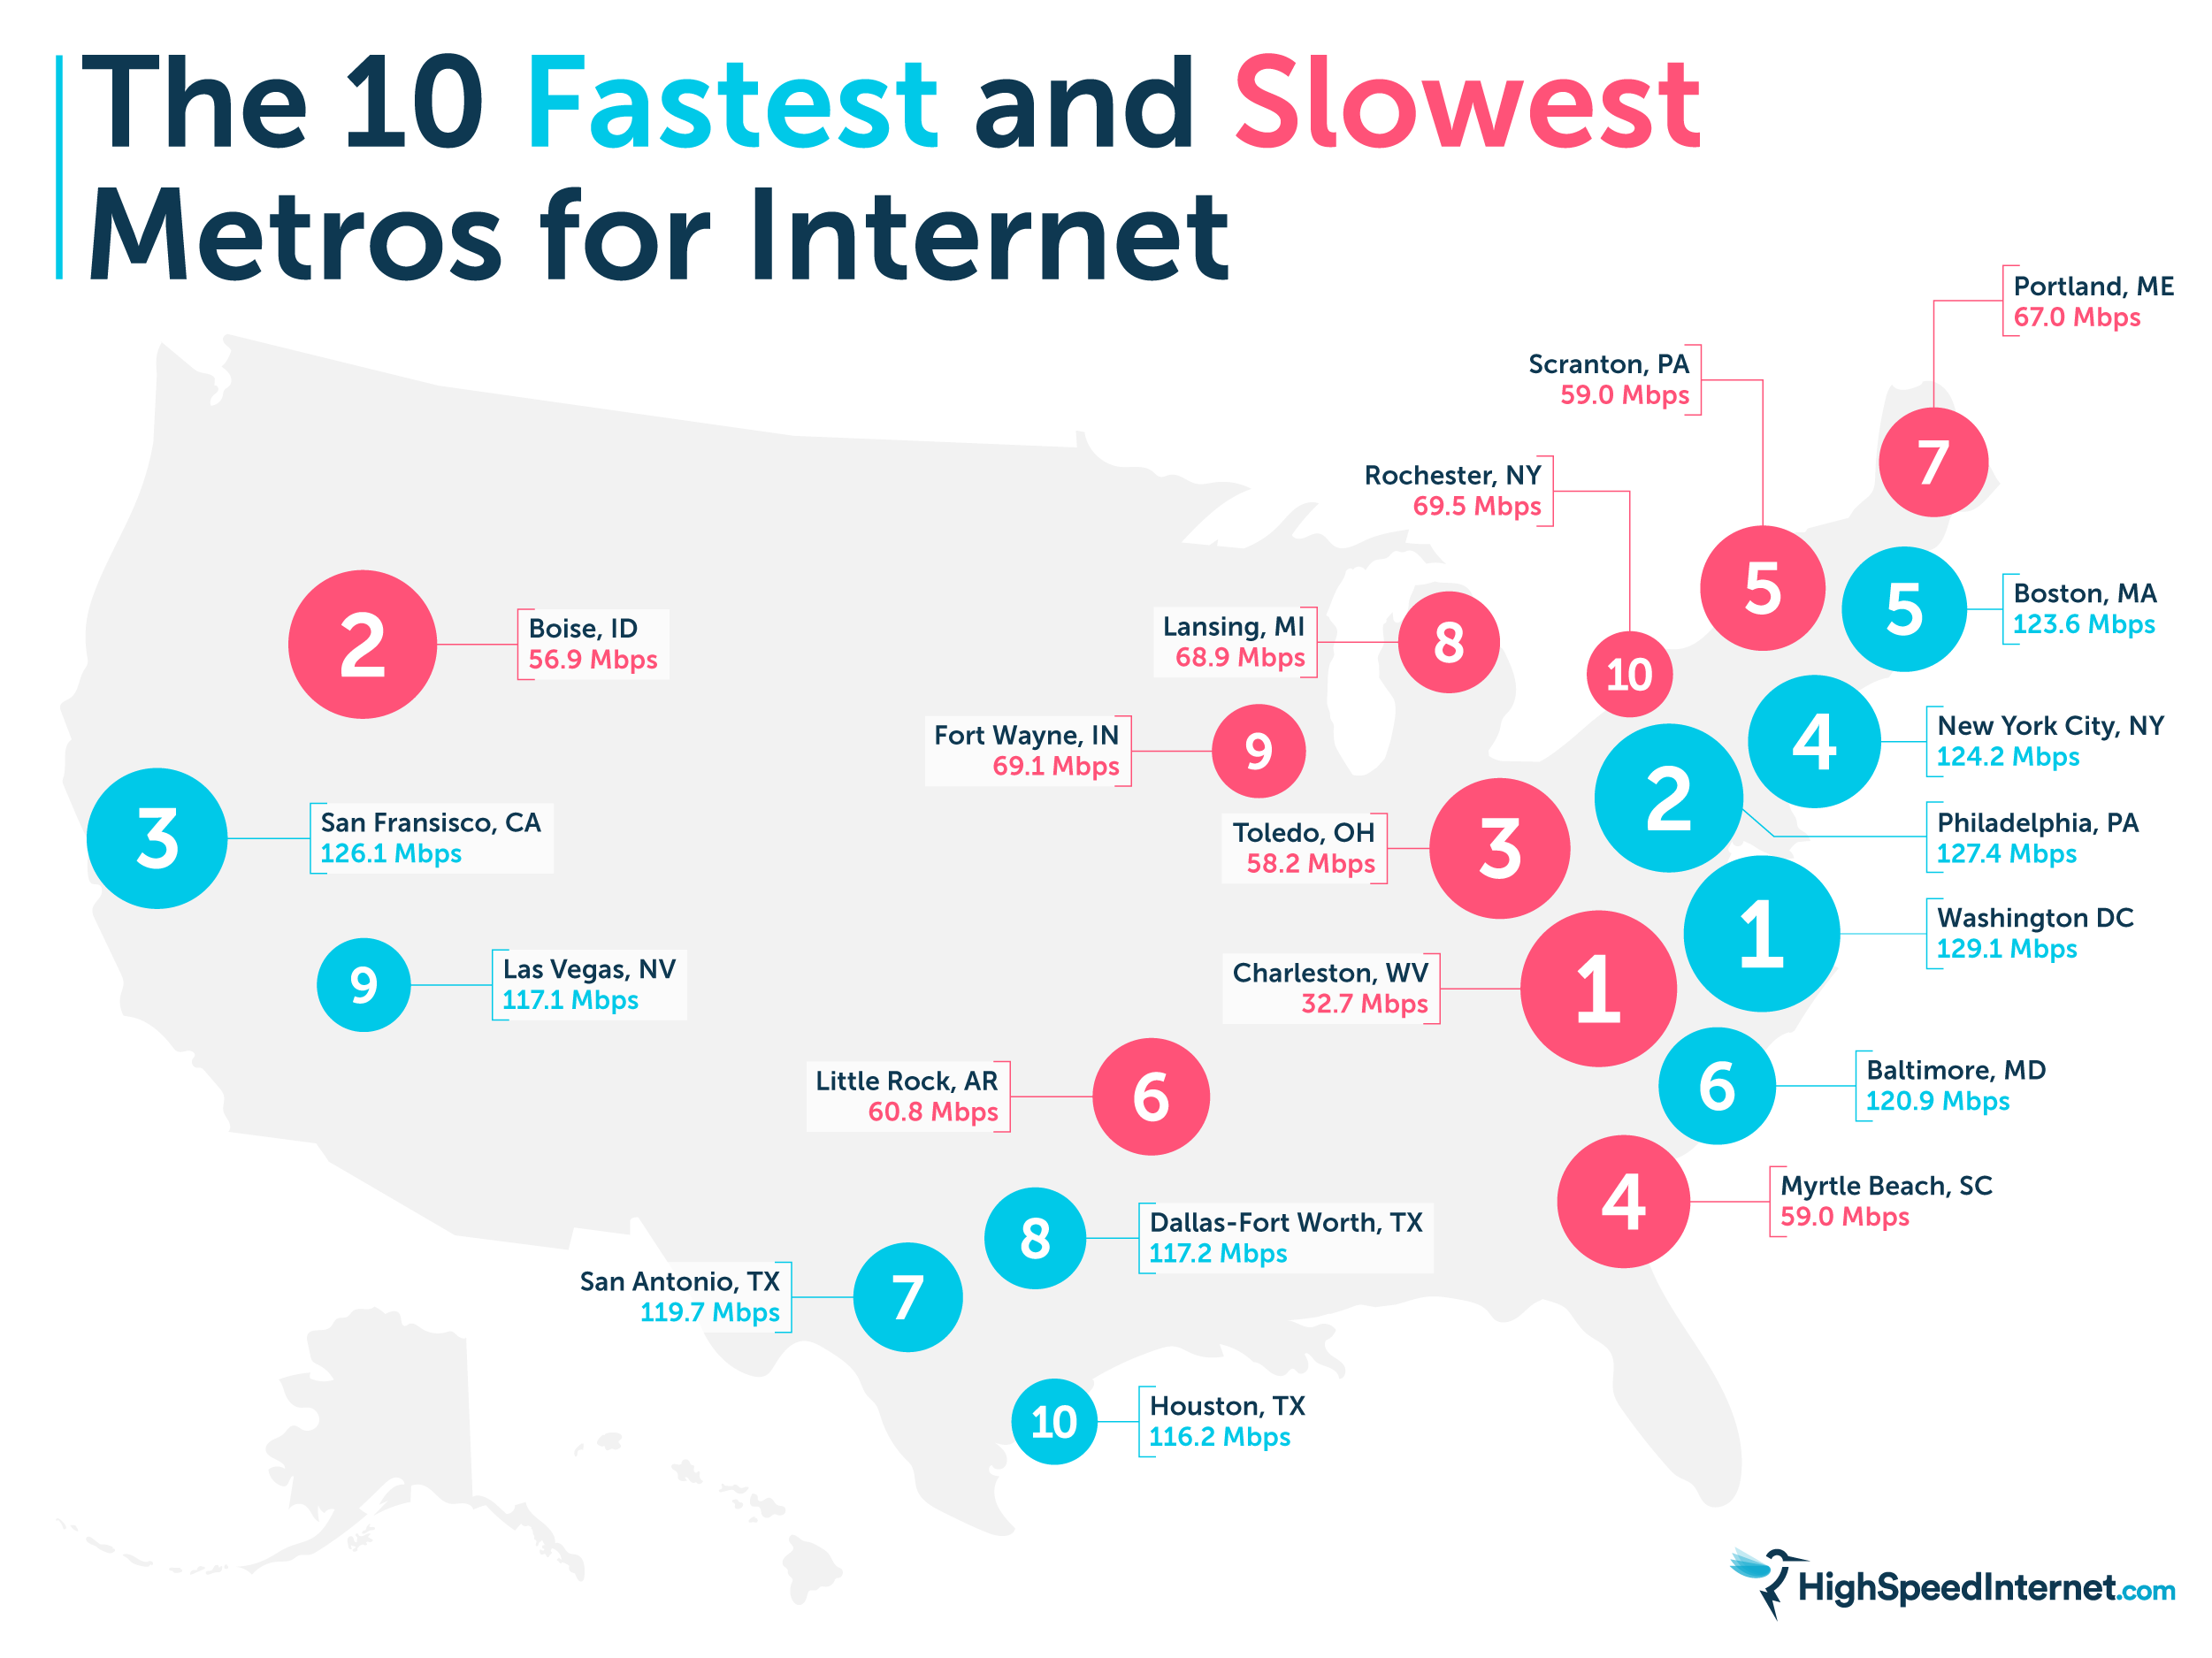 The Top 10 Fastest and Slowest Metros for Internet - HighSpeedInternet.com